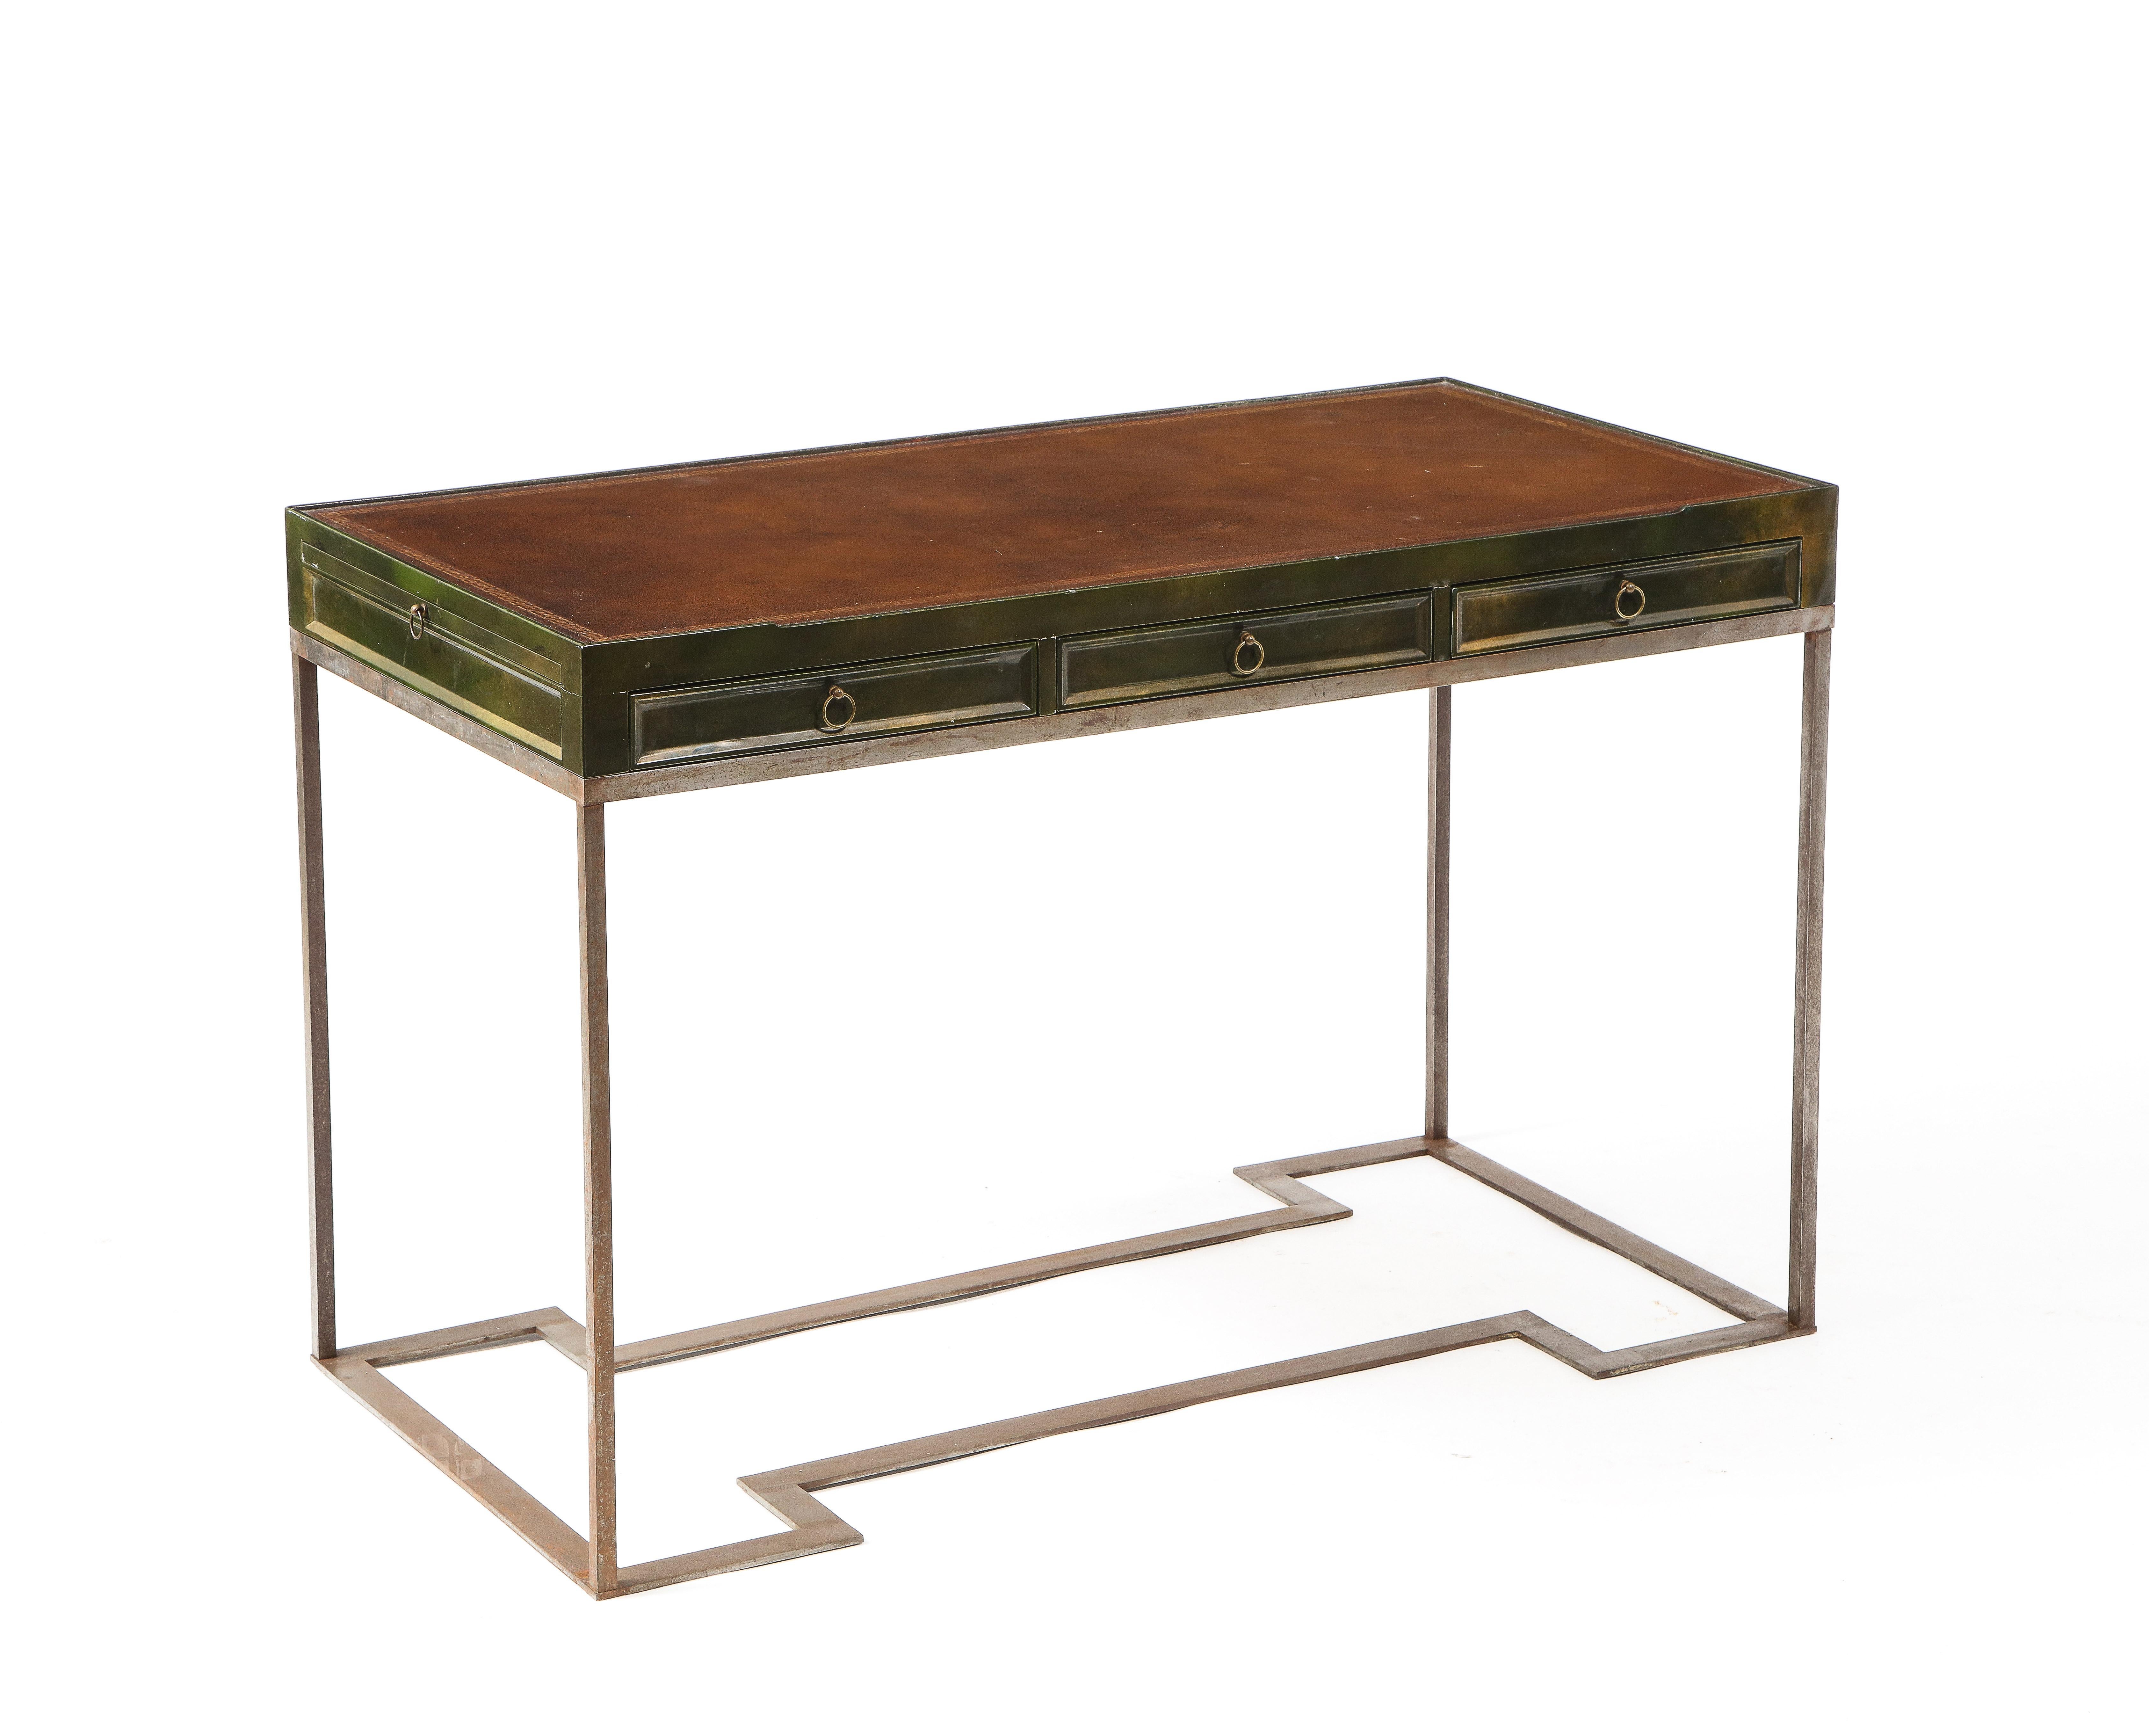 Maison Jansen Steel & Lacquered Modern Neoclassical Desk, France 1960's For Sale 2